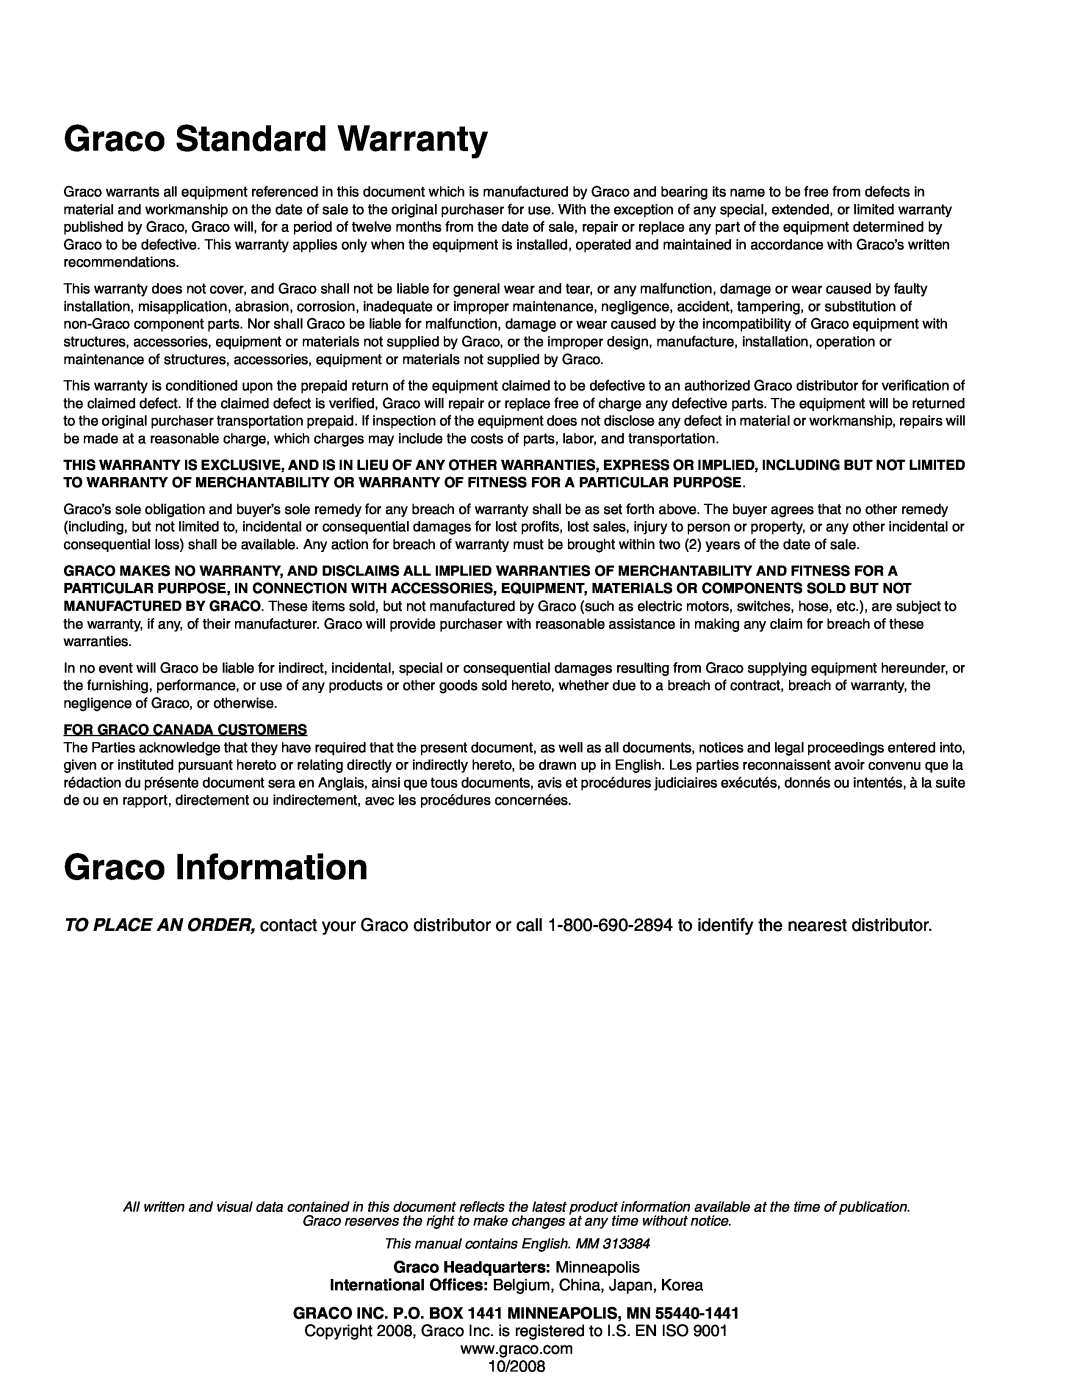 Graco Inc 313384B, 257030, 2000EX Graco Standard Warranty, Graco Information, Graco Headquarters Minneapolis, 10/2008 